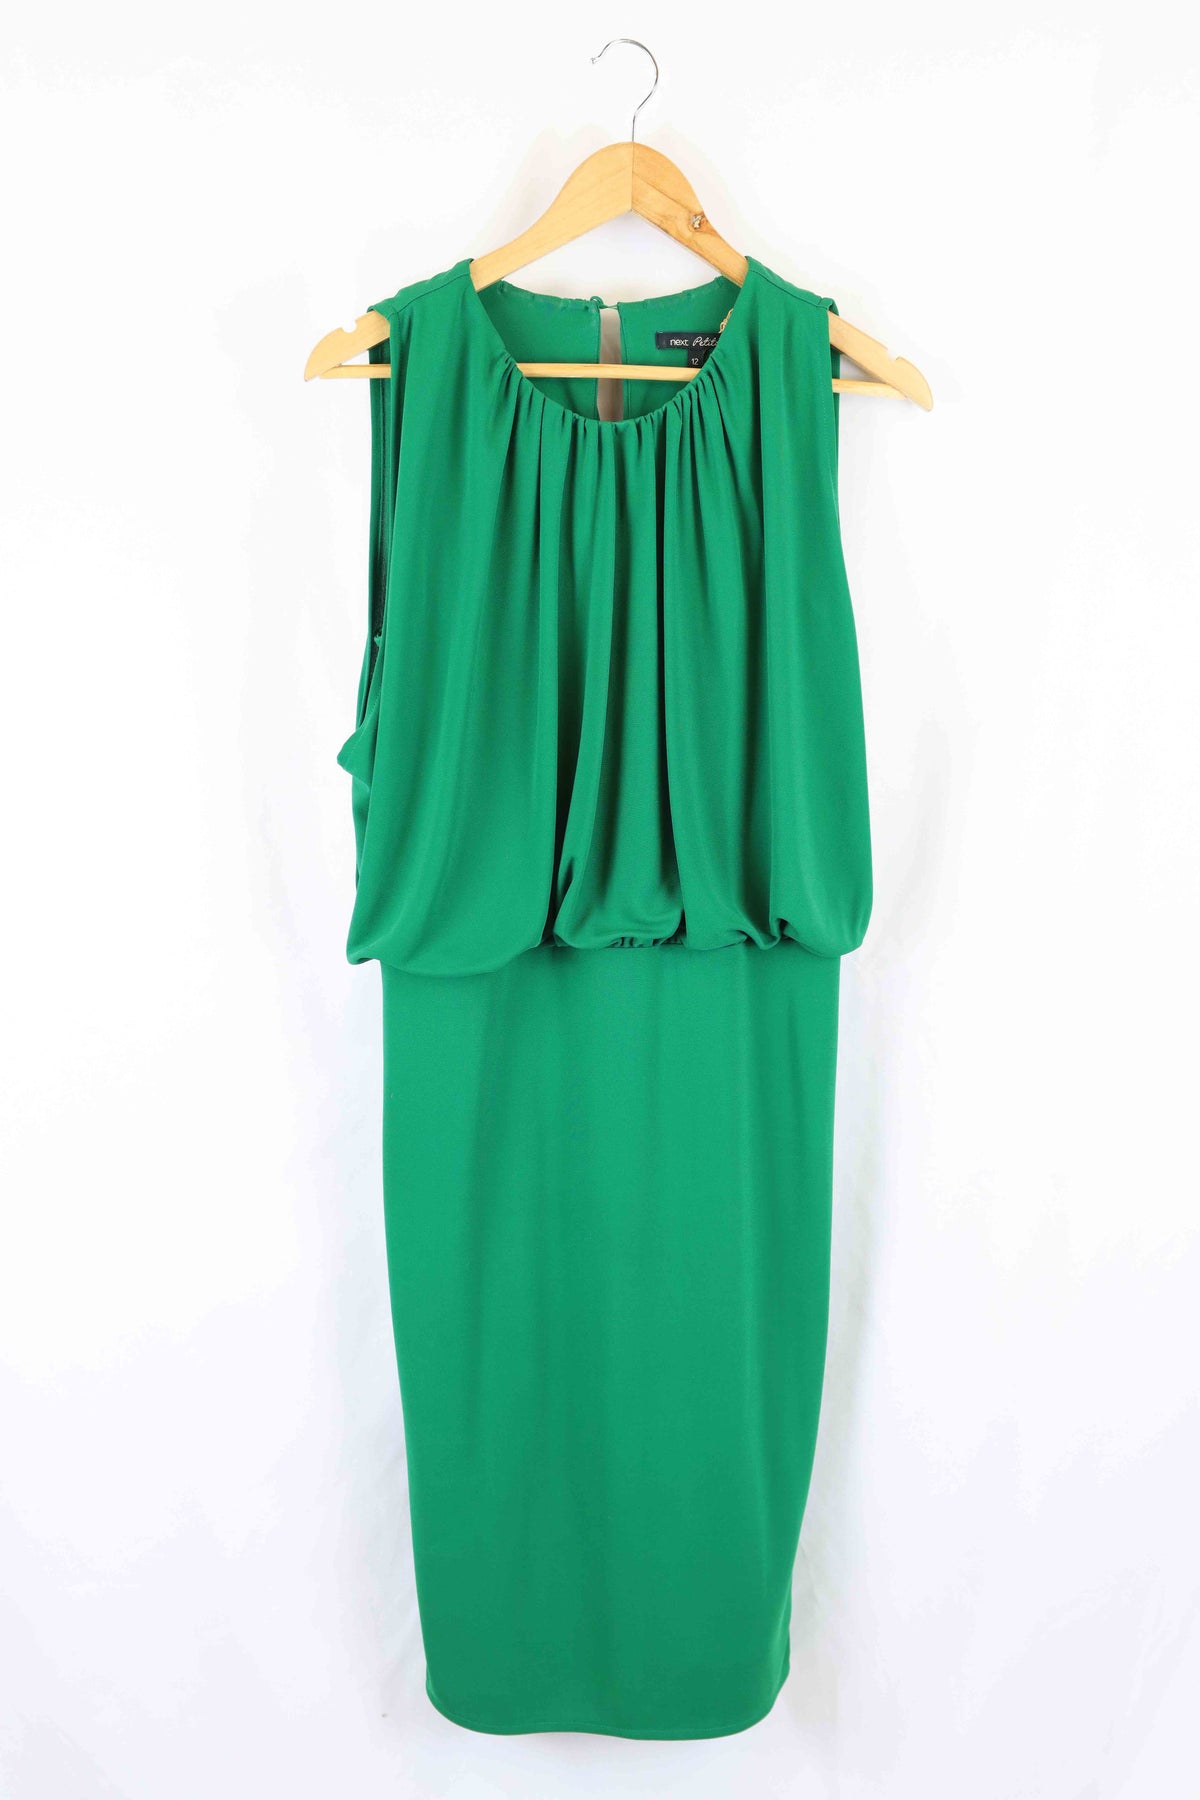 Next Petites Green Dress 12